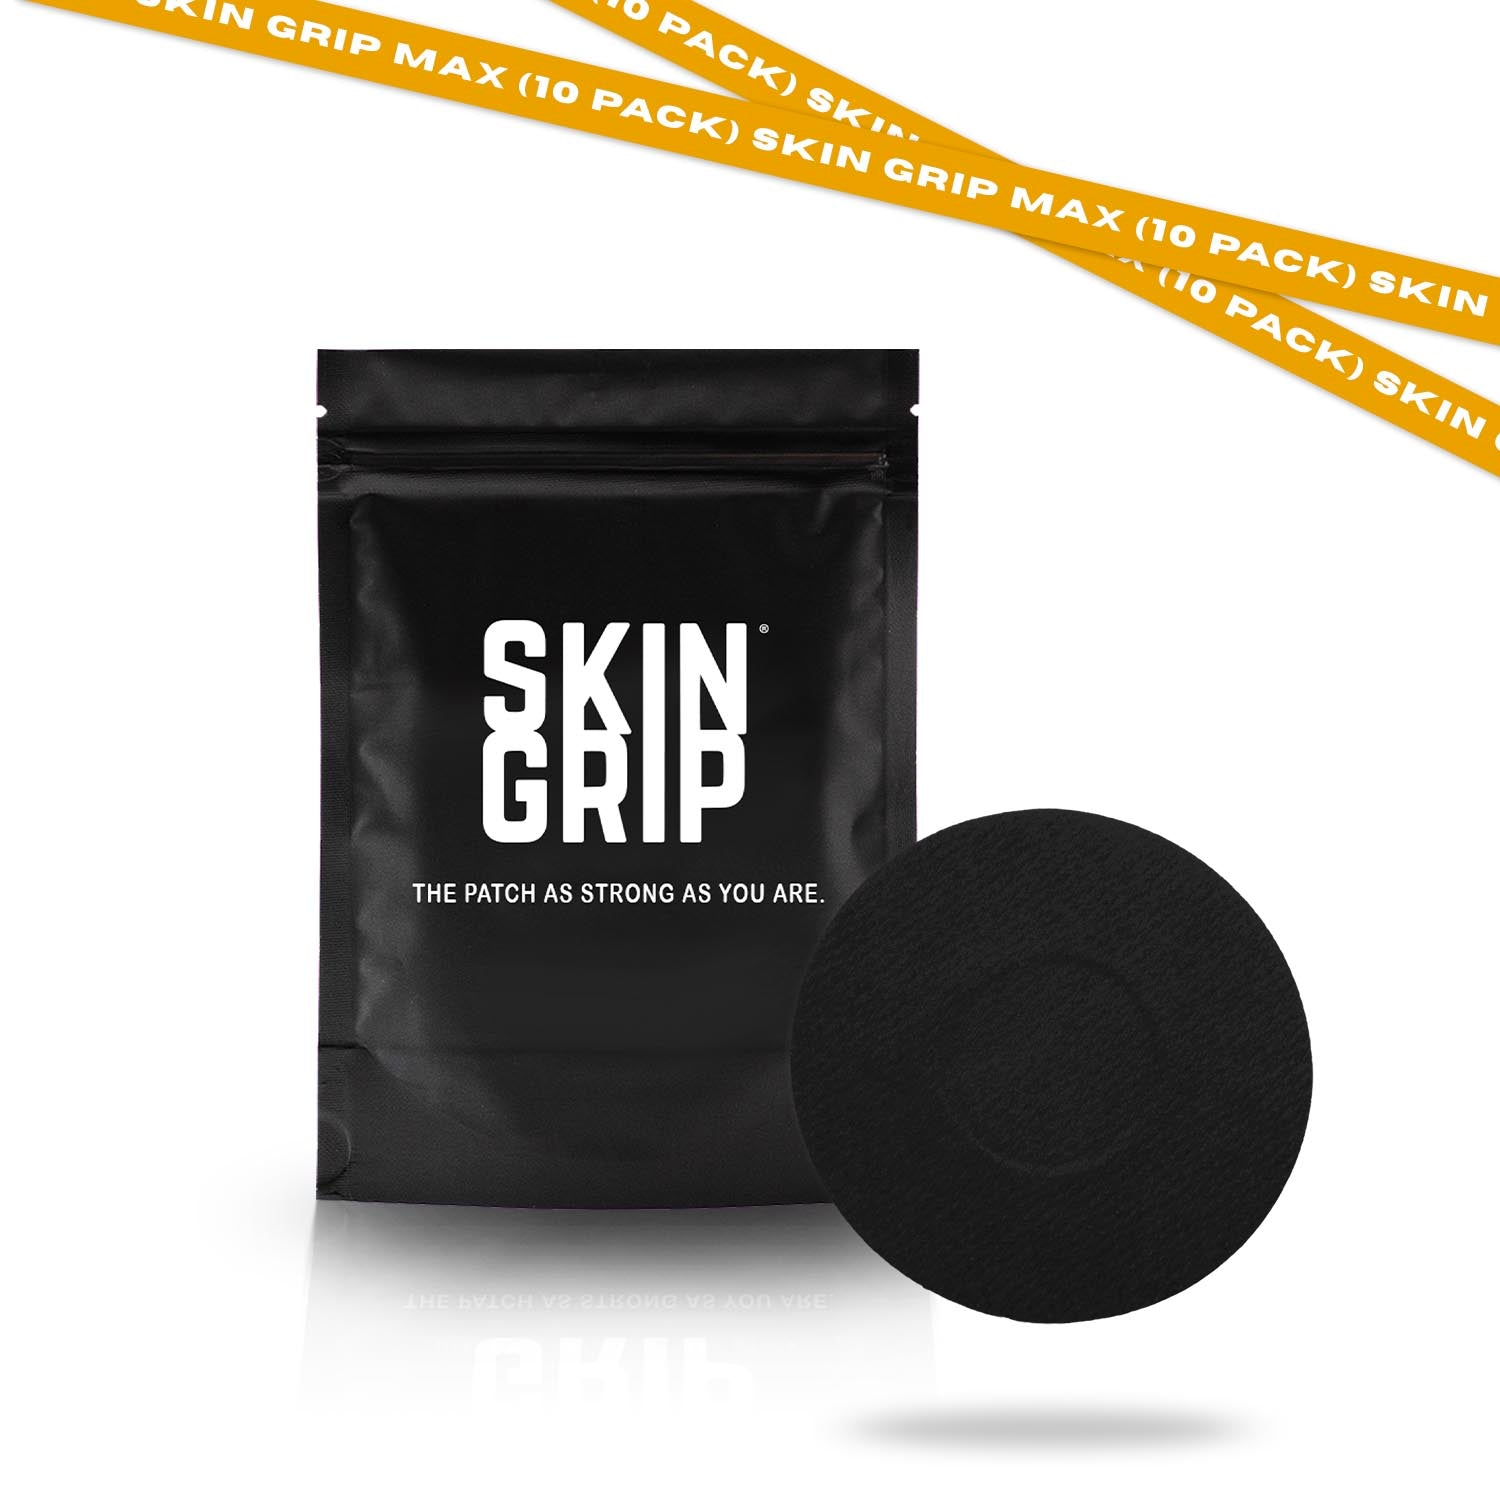 Skin Grip MAX Dexcom G7 Patches - 10 Pack